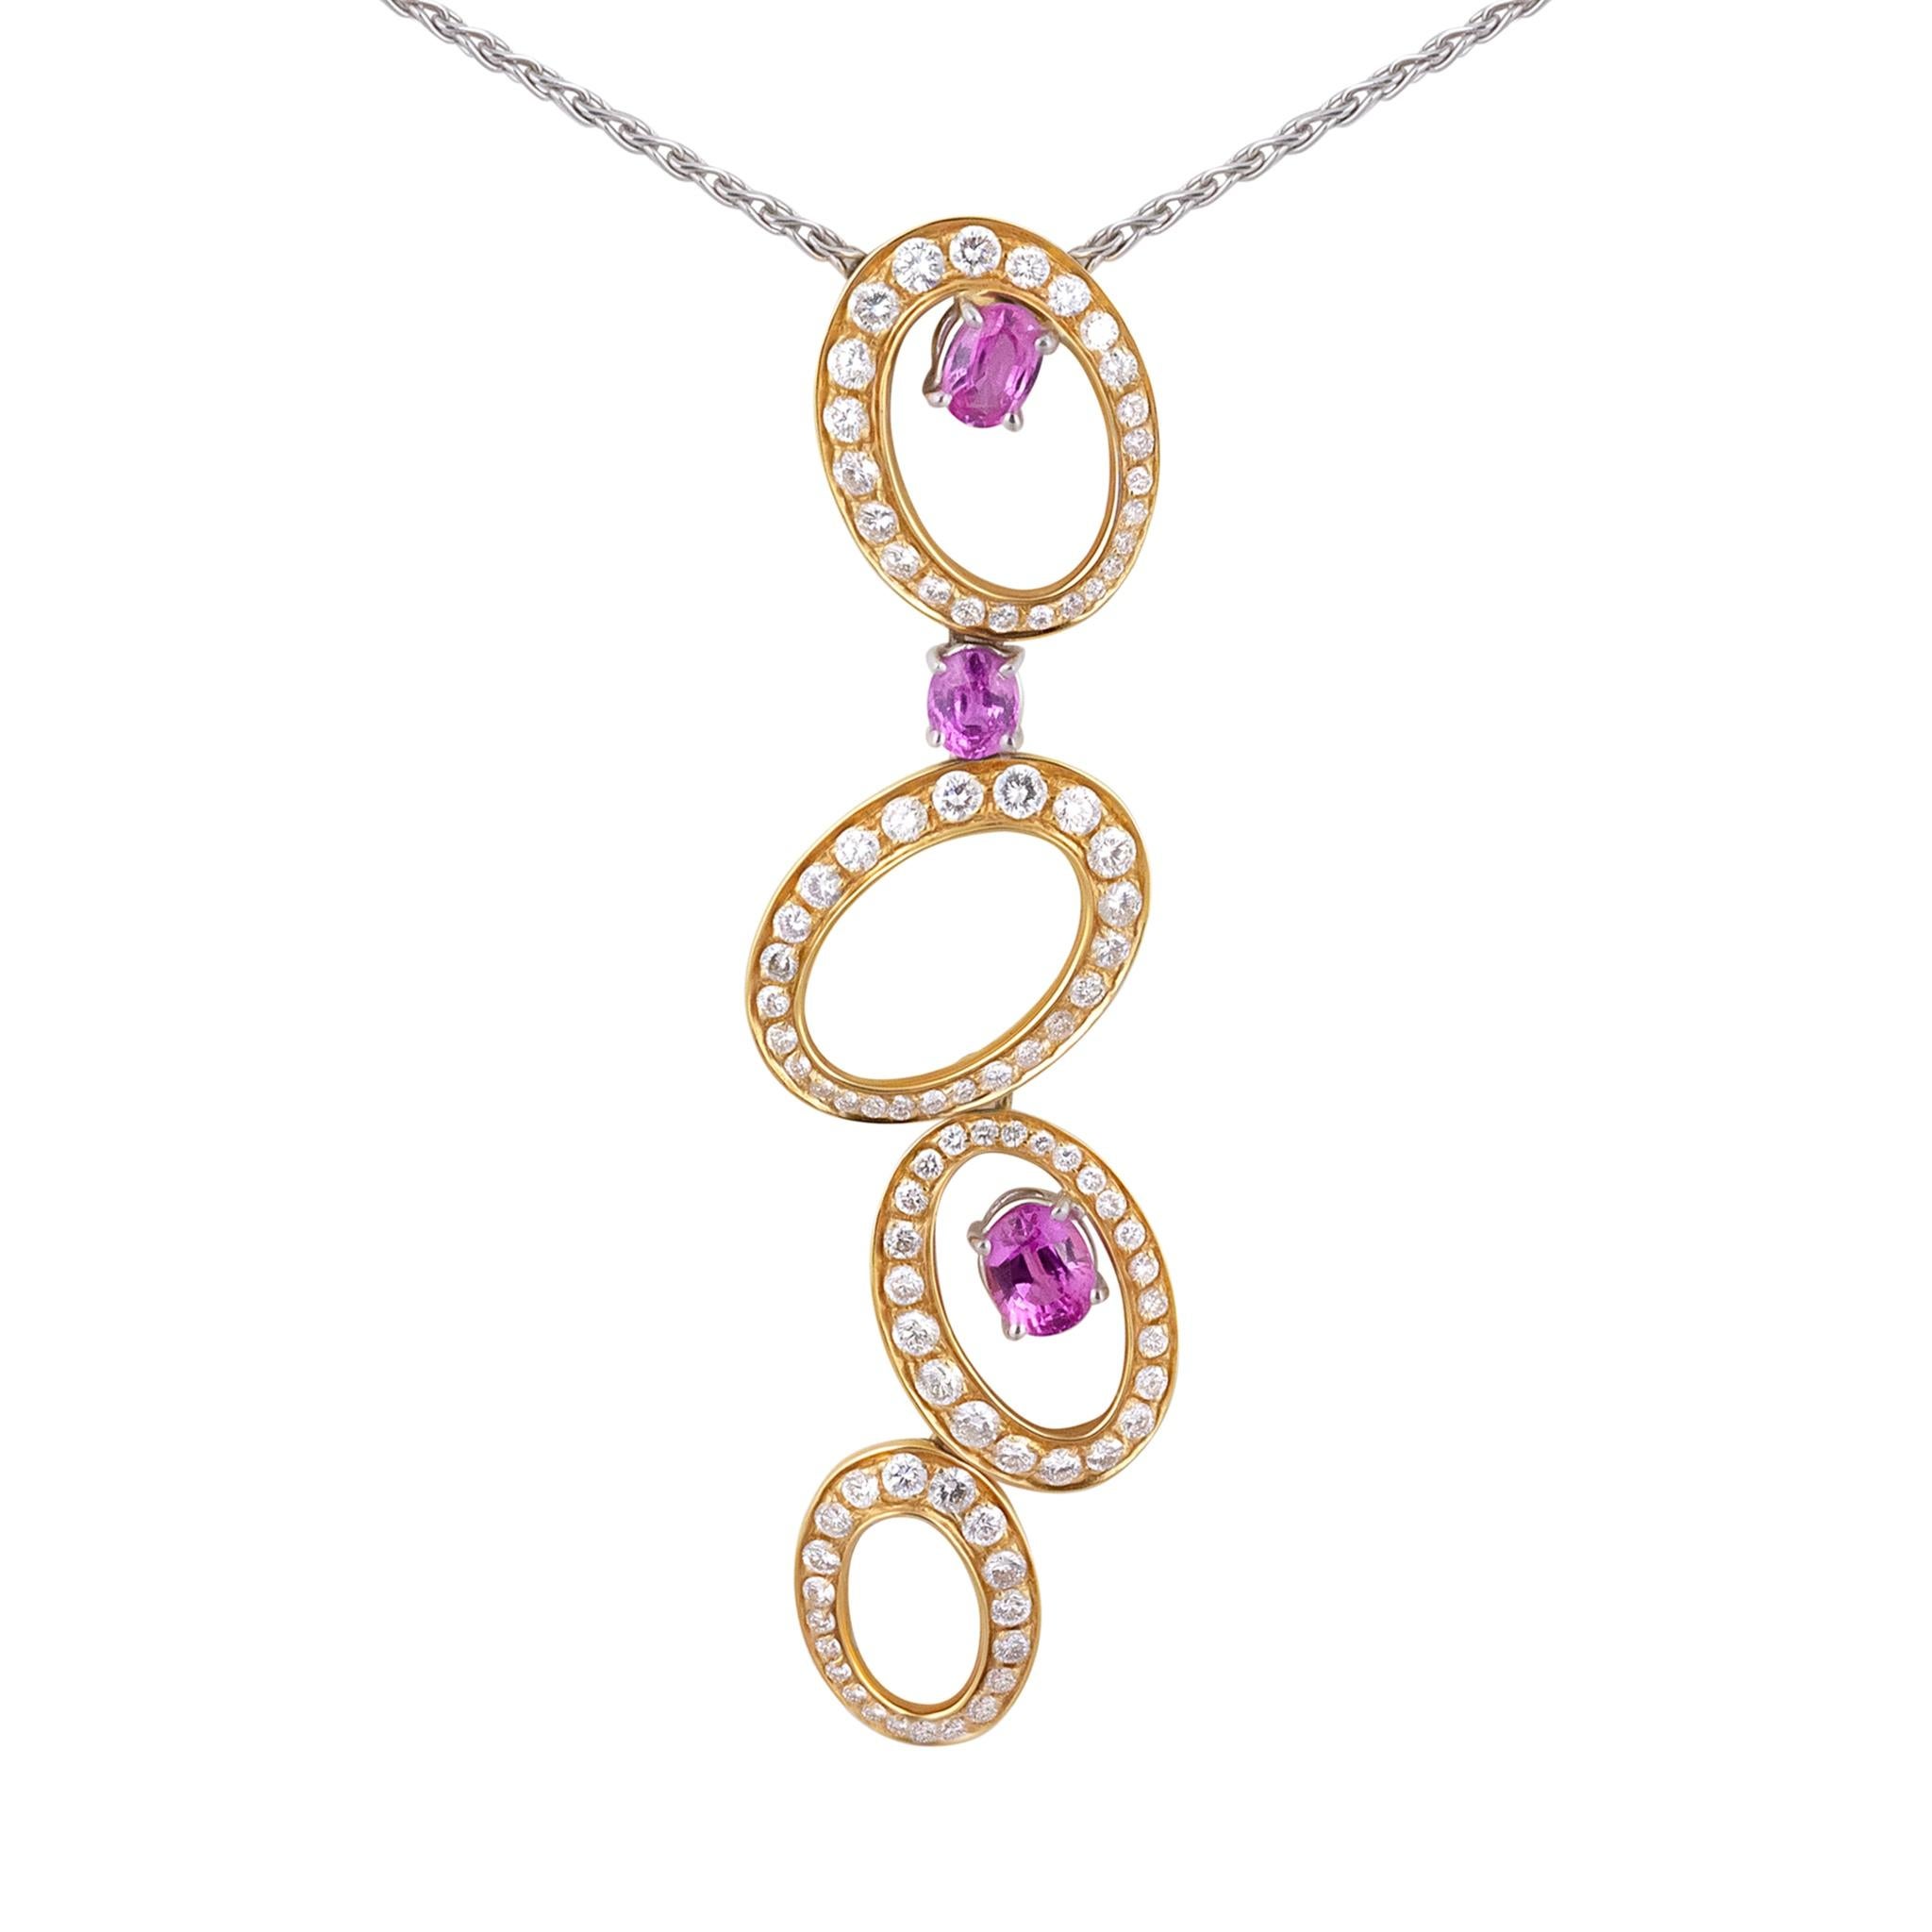 IO SI Necklace
18K White & Yellow Gold
Diamond: 2.00ctw
Sapphire: 2.06ctw
Retail price: $25,000.00
SKU: BLU01855
Italian made